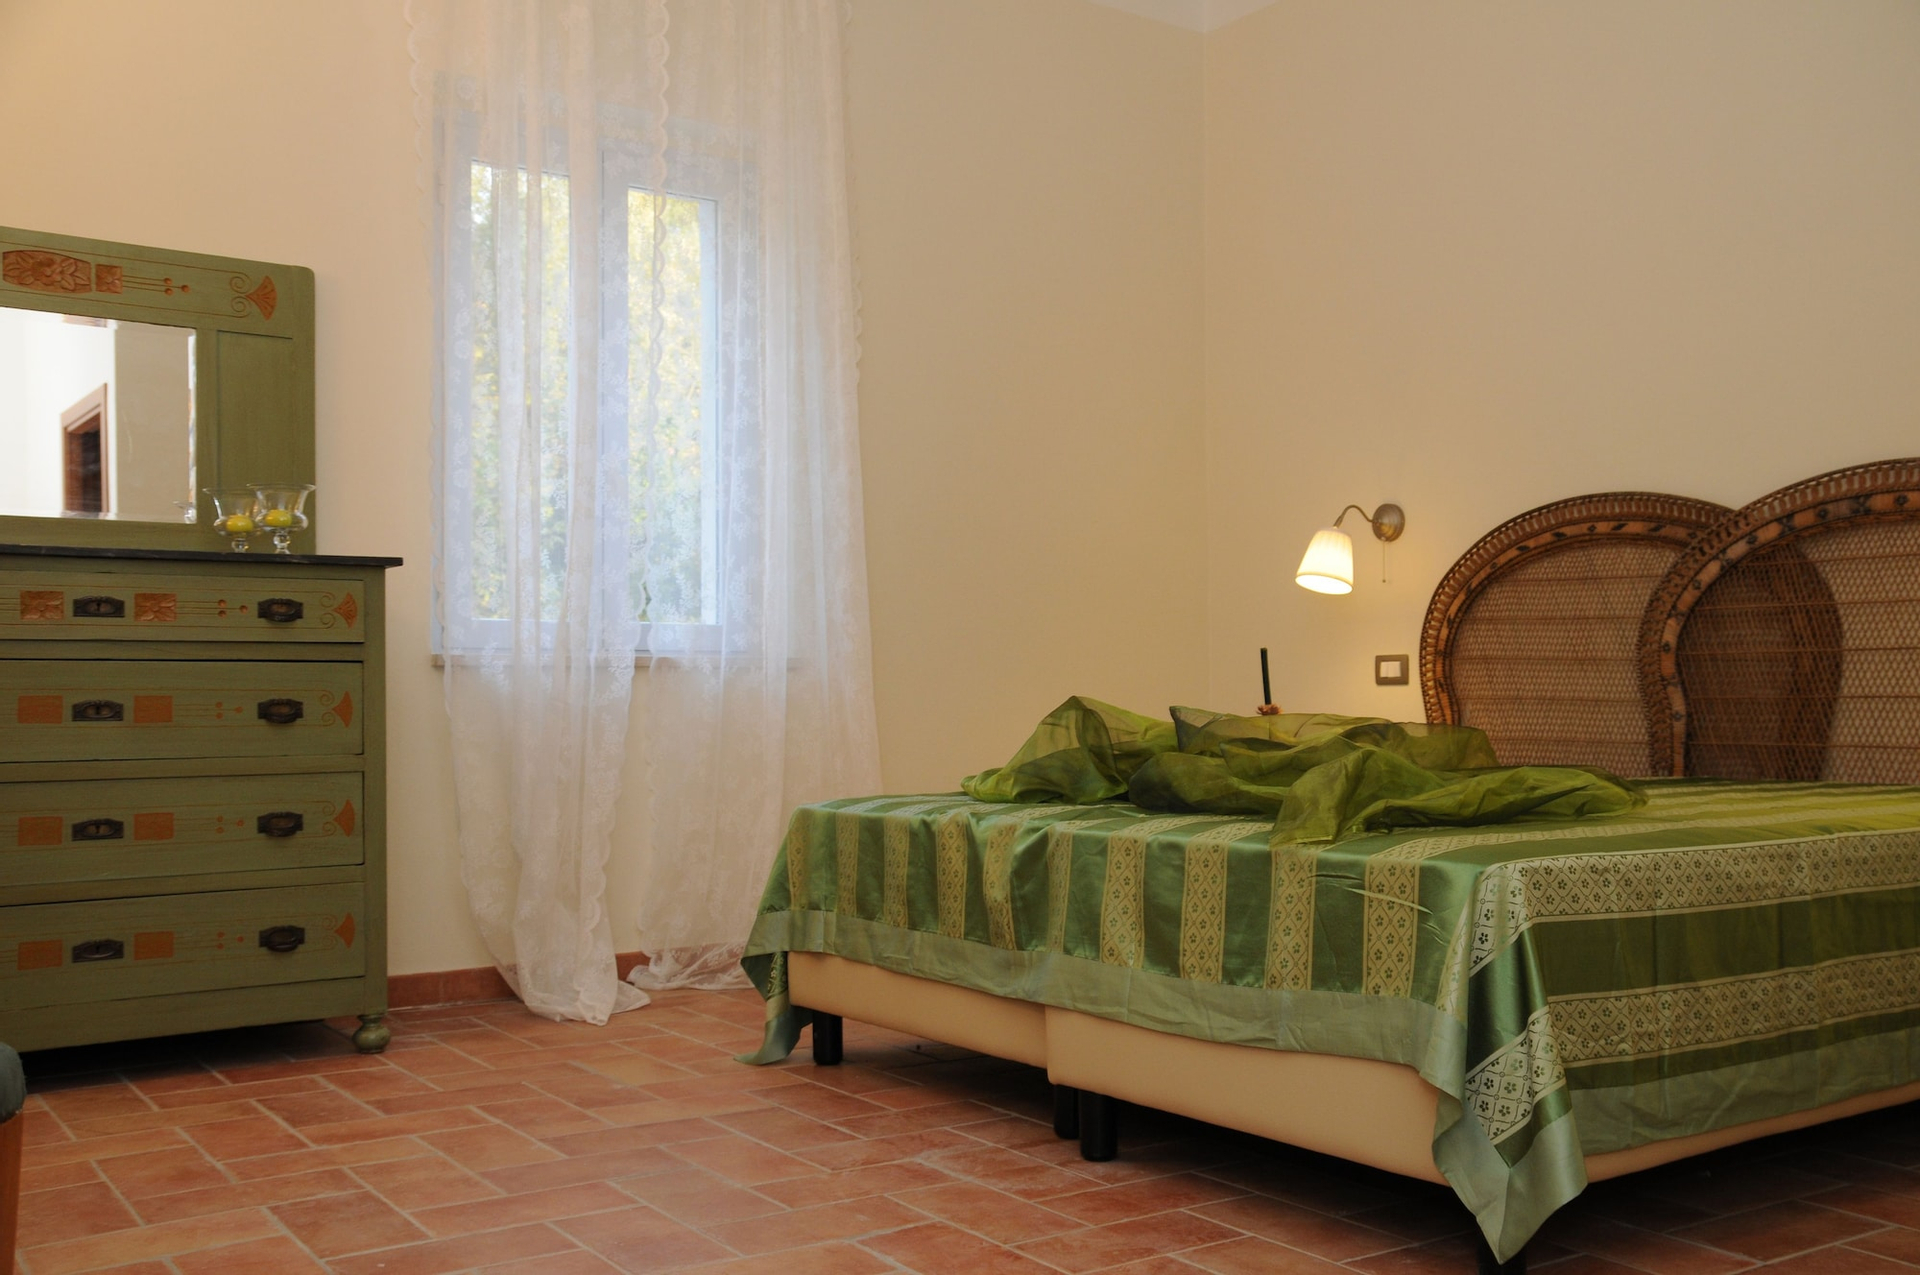 Bedroom 3, Oasi La Cascata, Terni